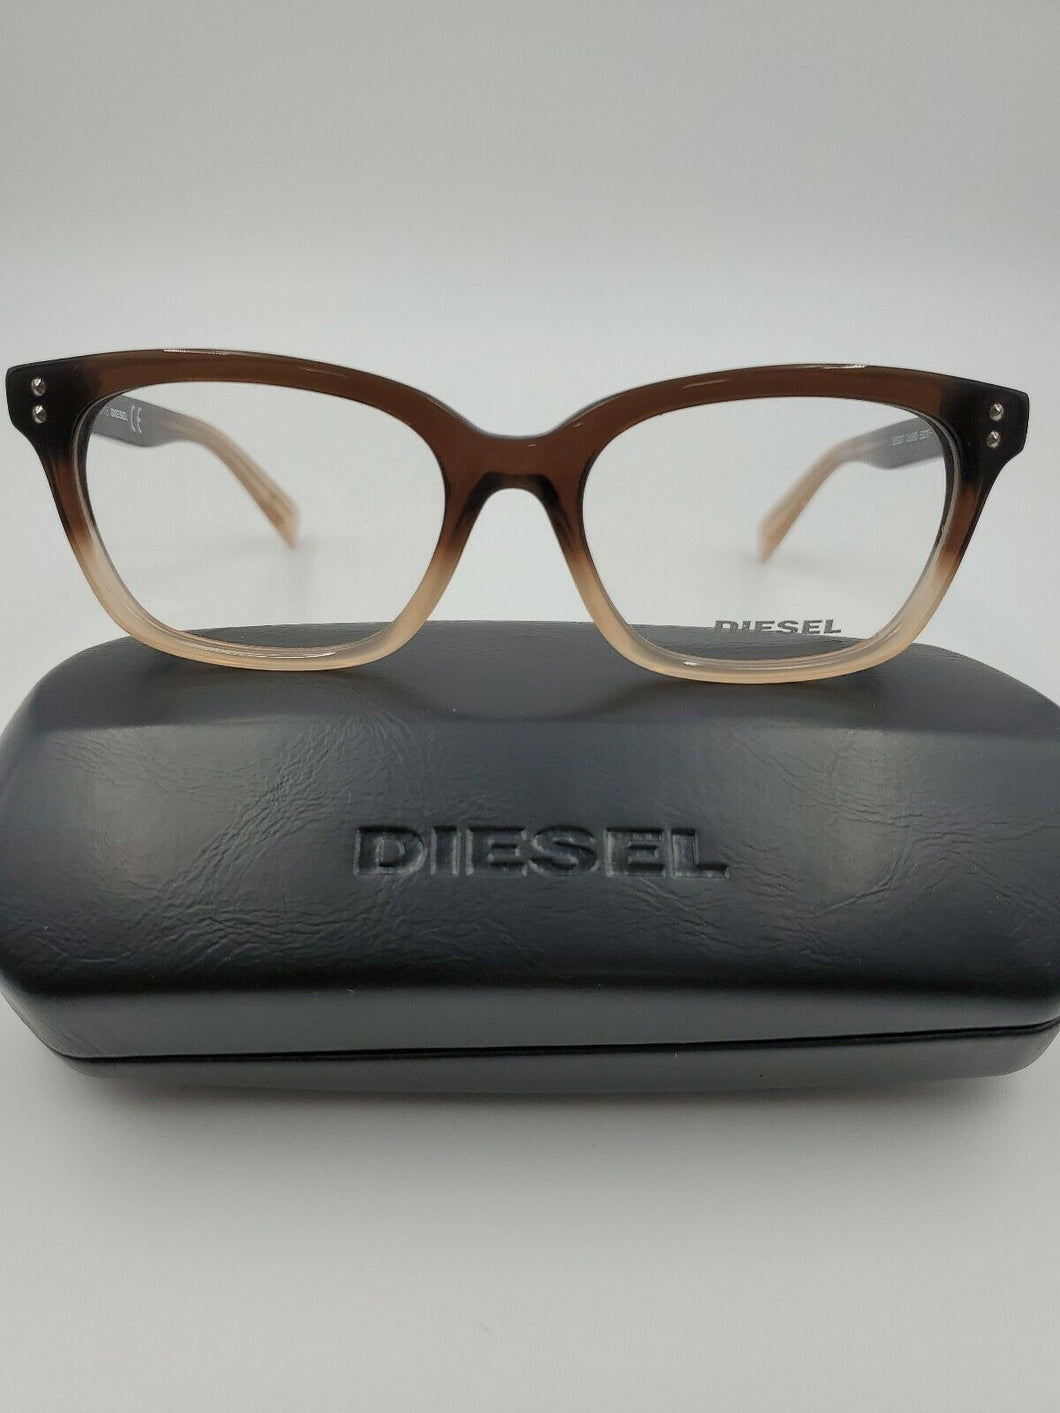 NEW DIESEL Eyeglasses DL5037 COL.050 Size 53 - 17 MM UNISEX RX FRAME BROWN FADE